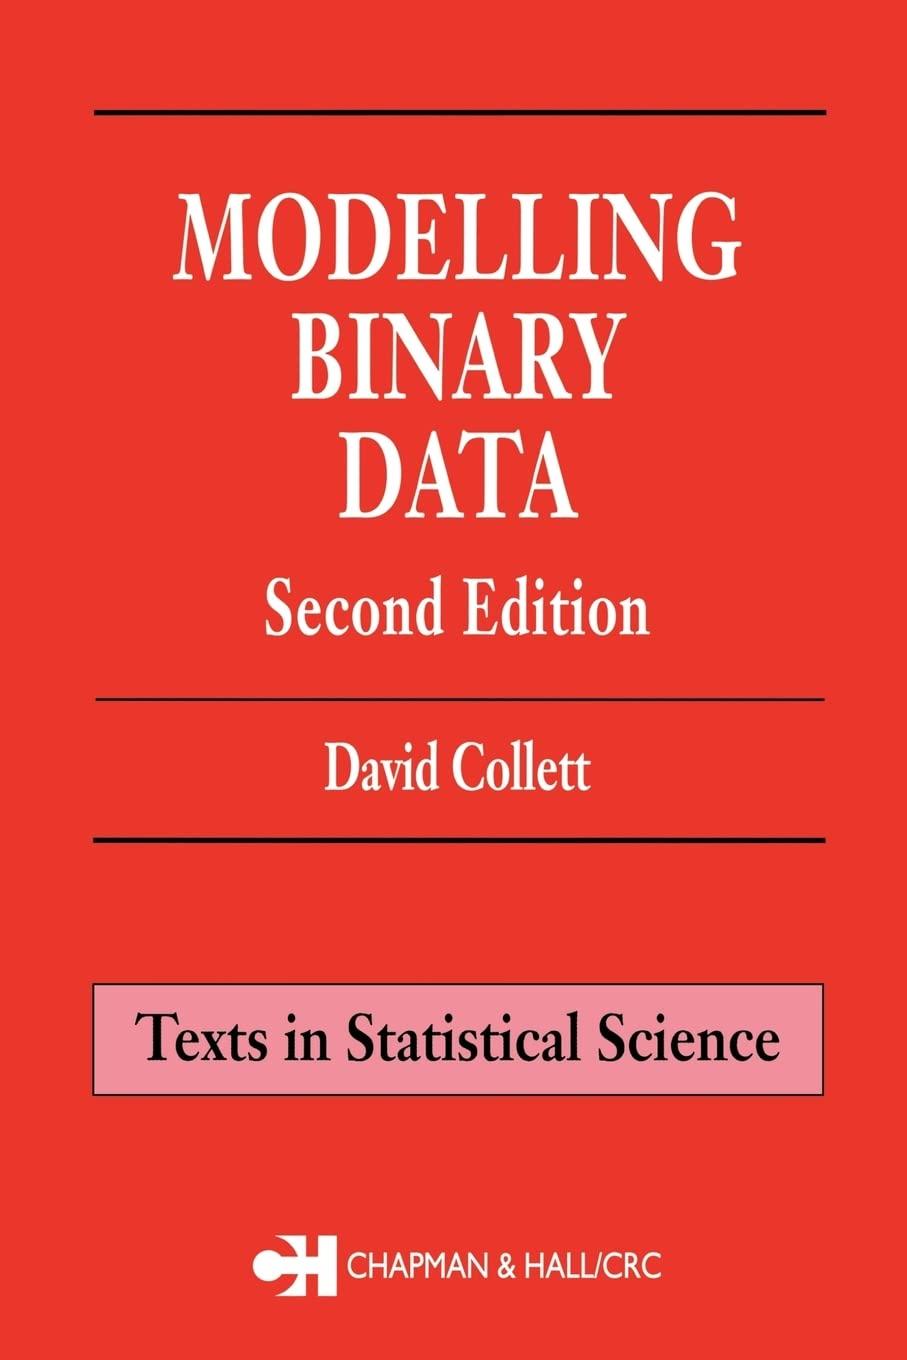 modelling binary data 2nd edition david collett 1584883243, 9781584883241